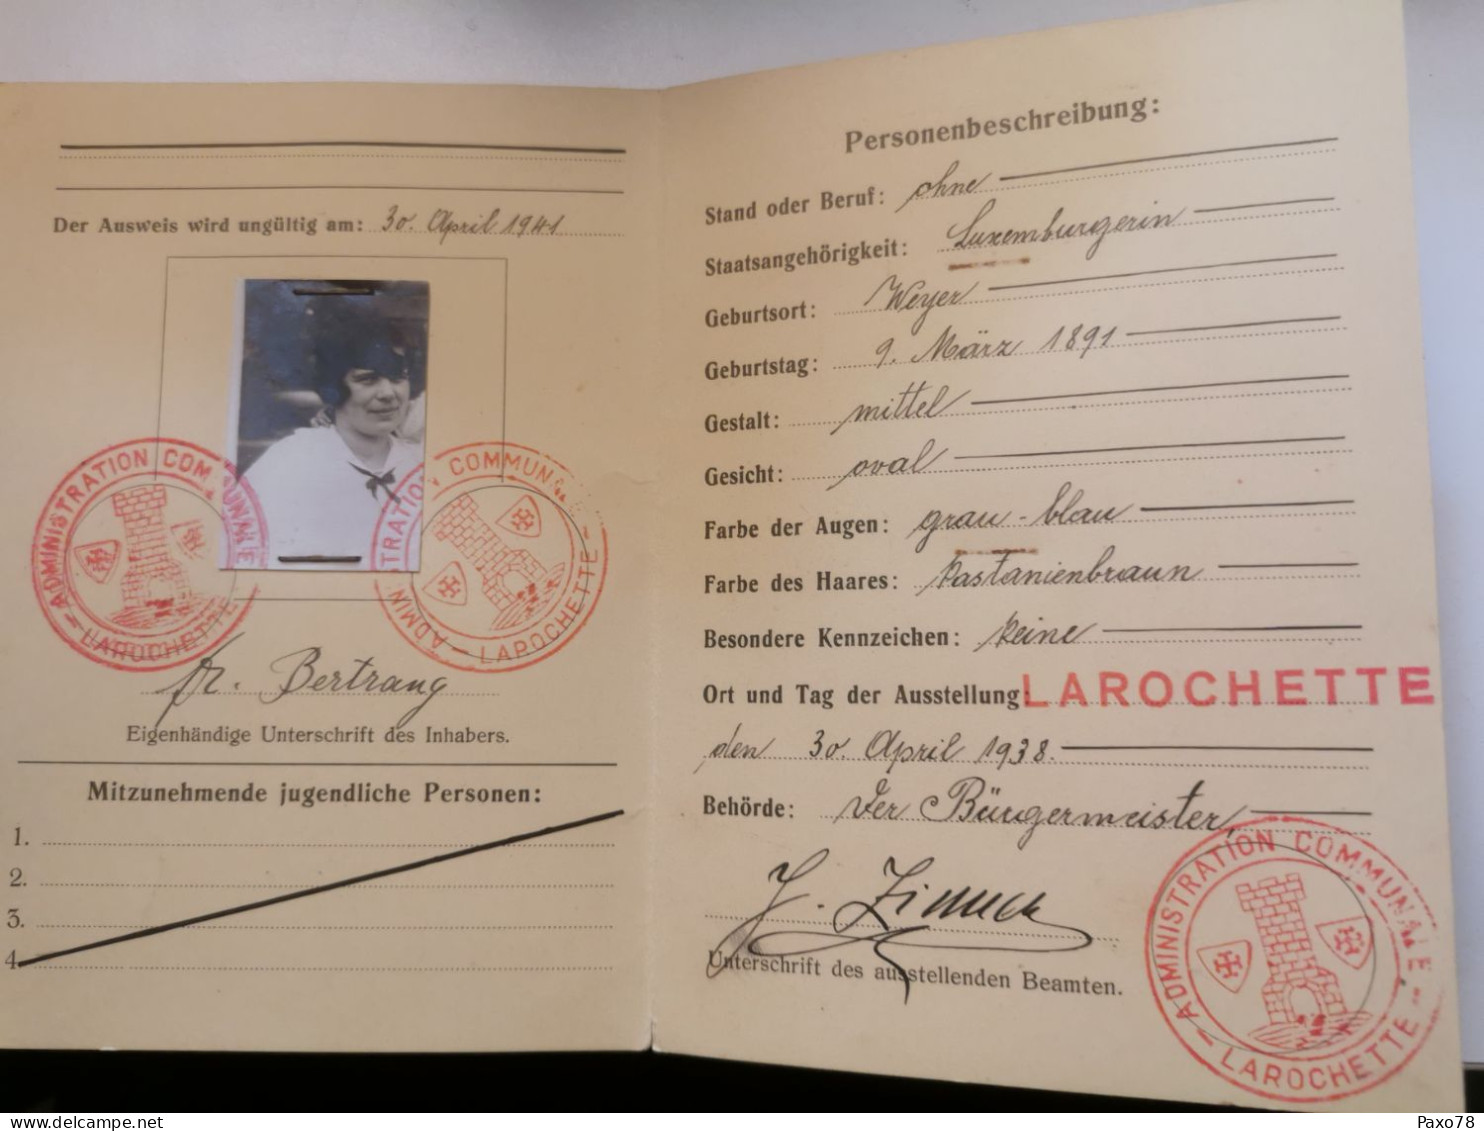 Grenz-Ausweis, Larochette 1938 - 1940-1944 German Occupation